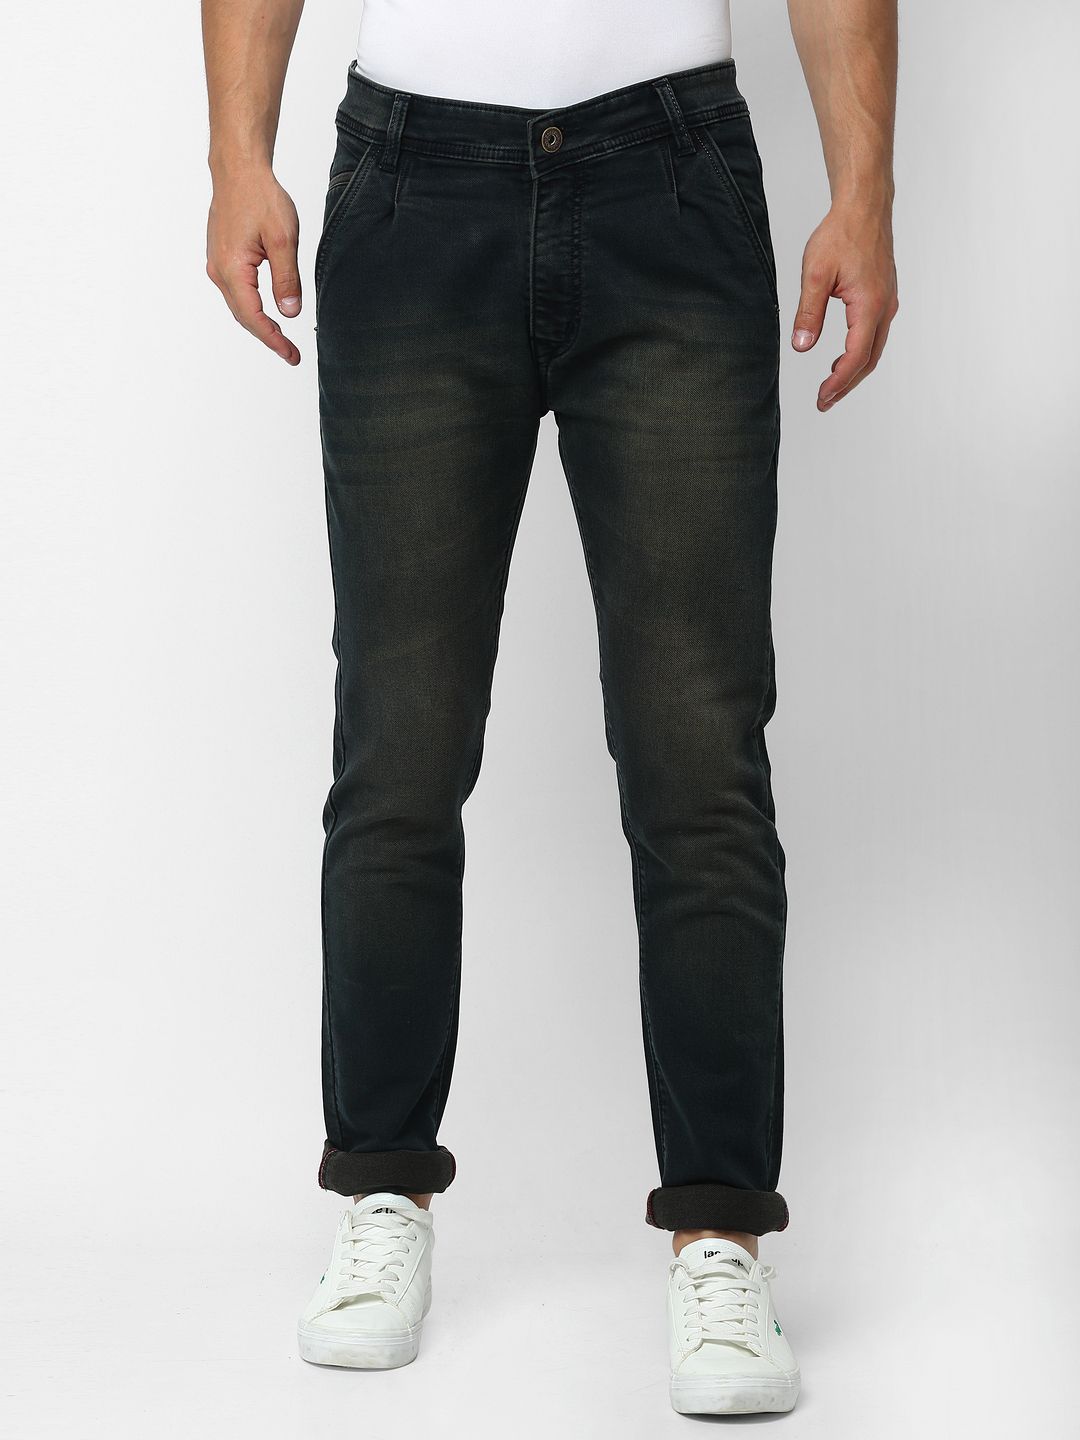     			Rodamo Slim Fit Basic Men's Jeans - Black ( Pack of 1 )